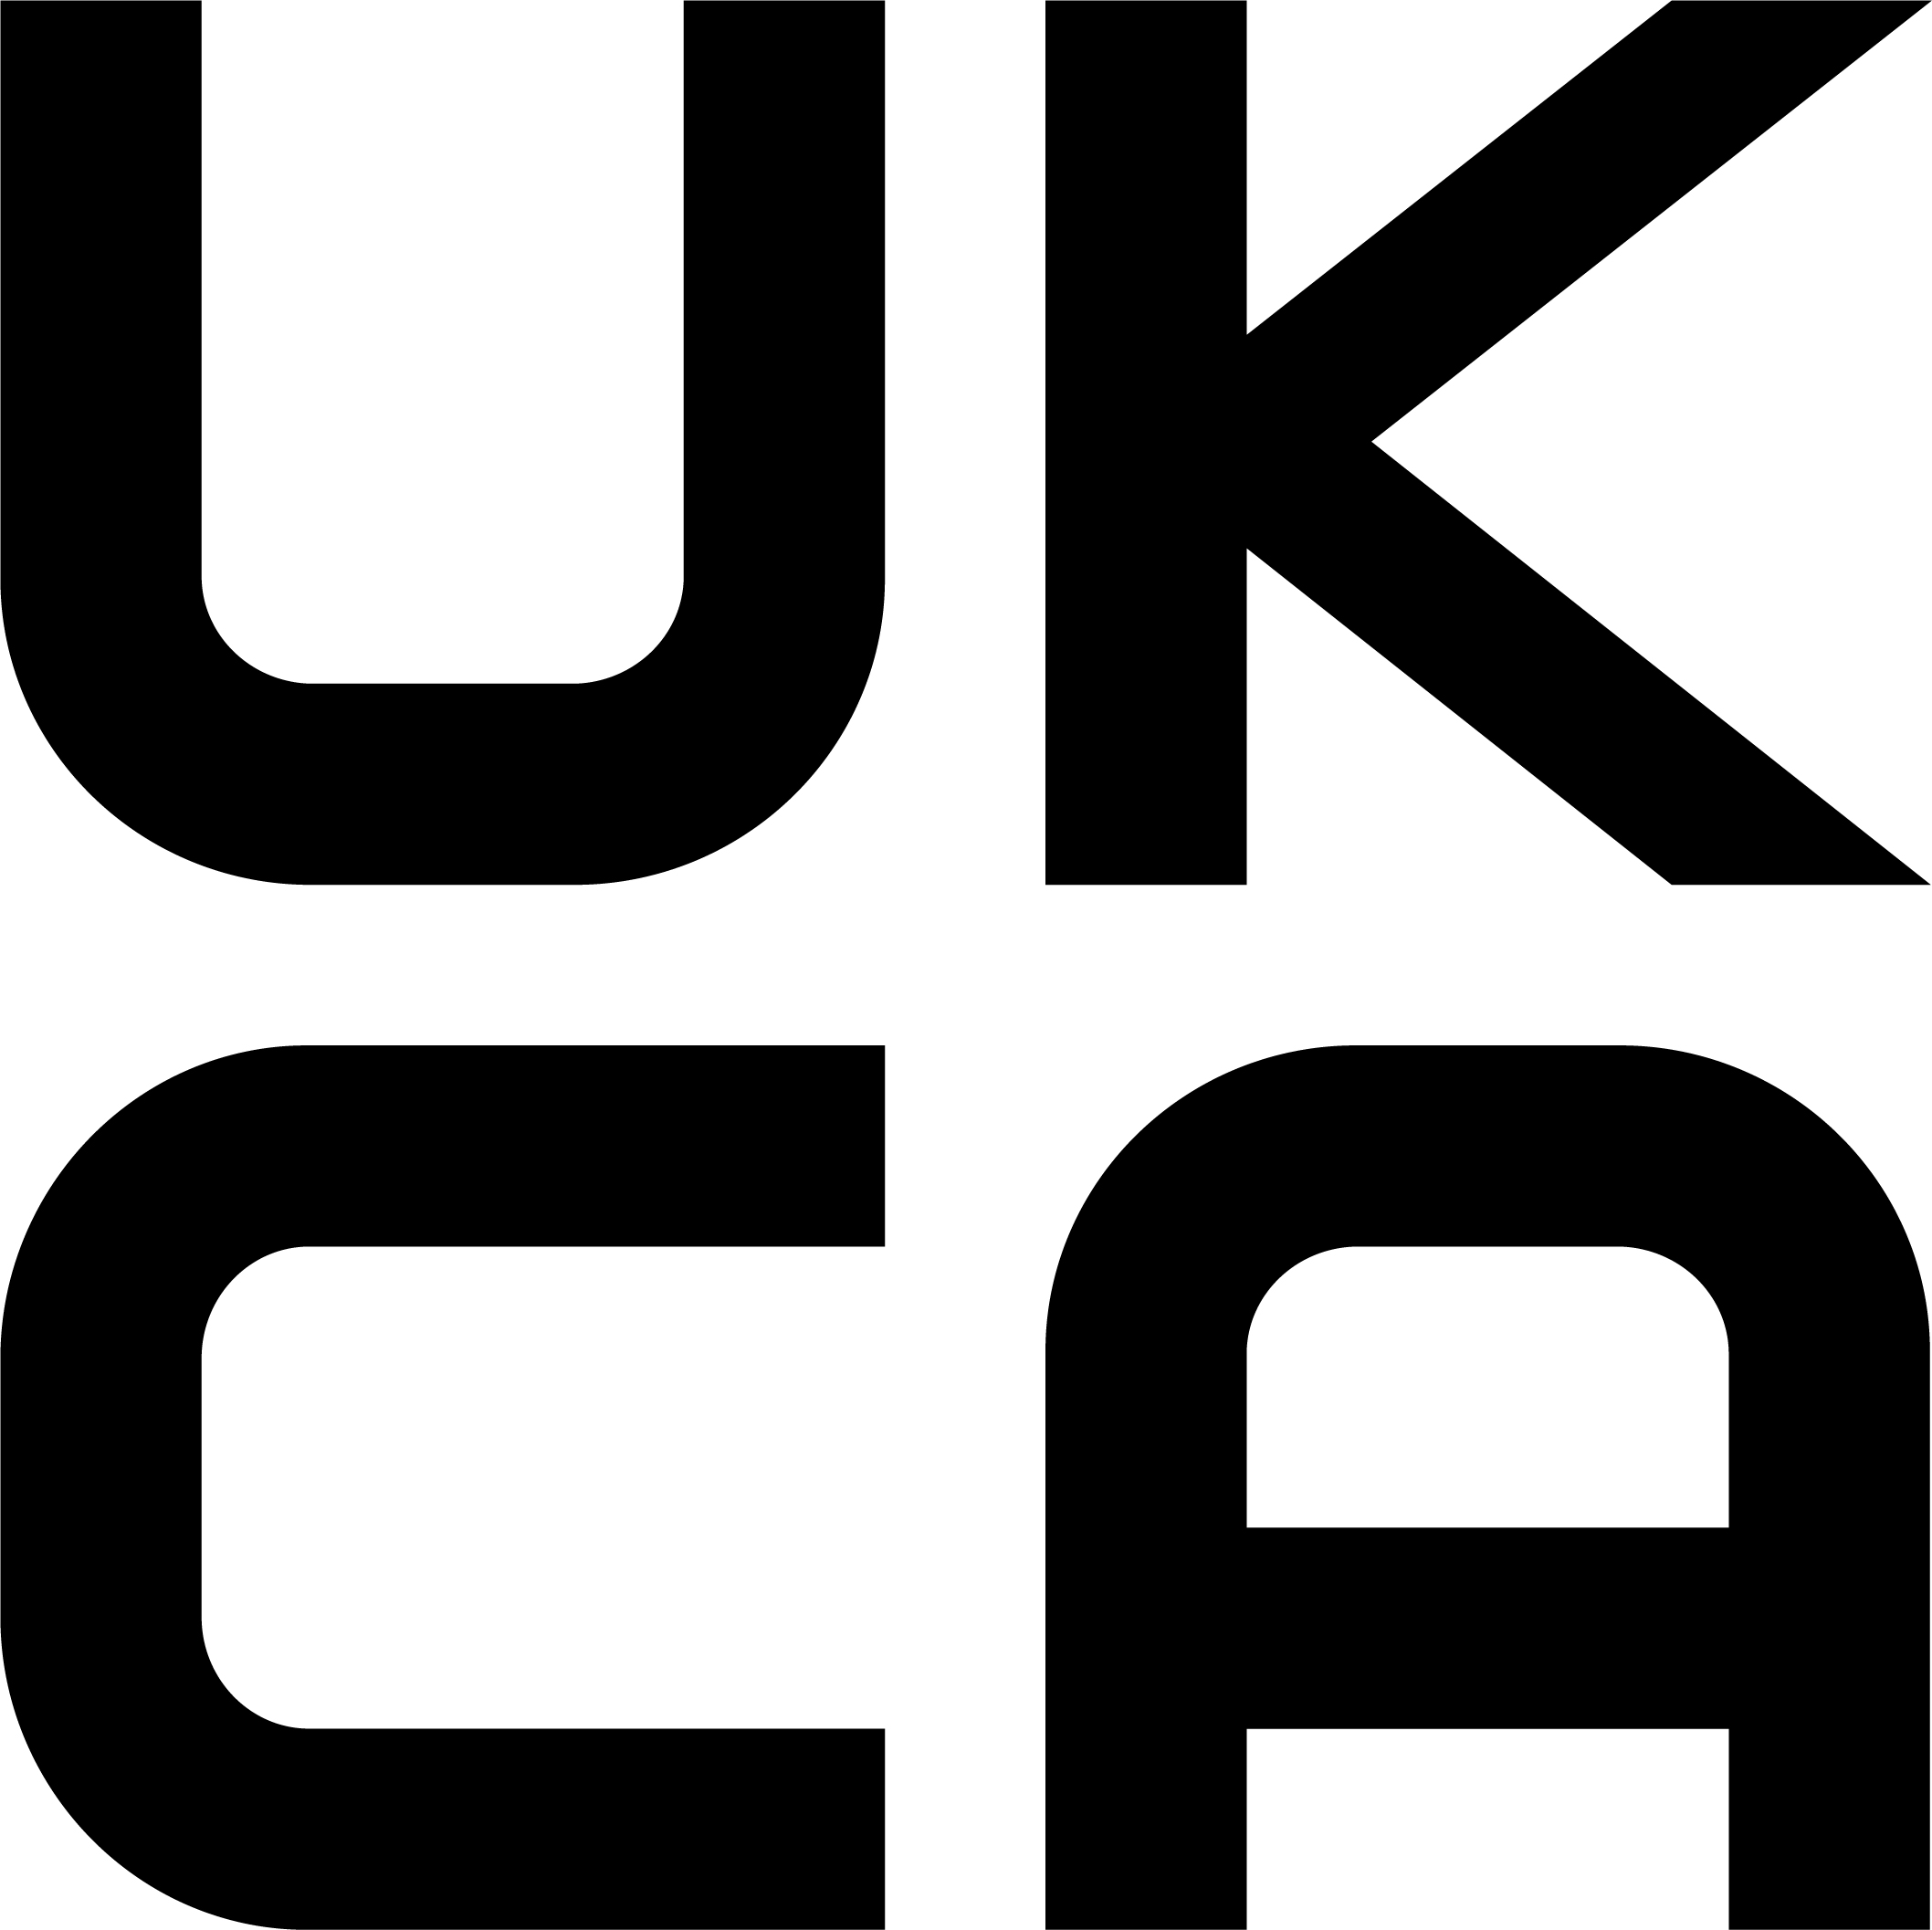 UK Conformity Assessed (UKCA marking)